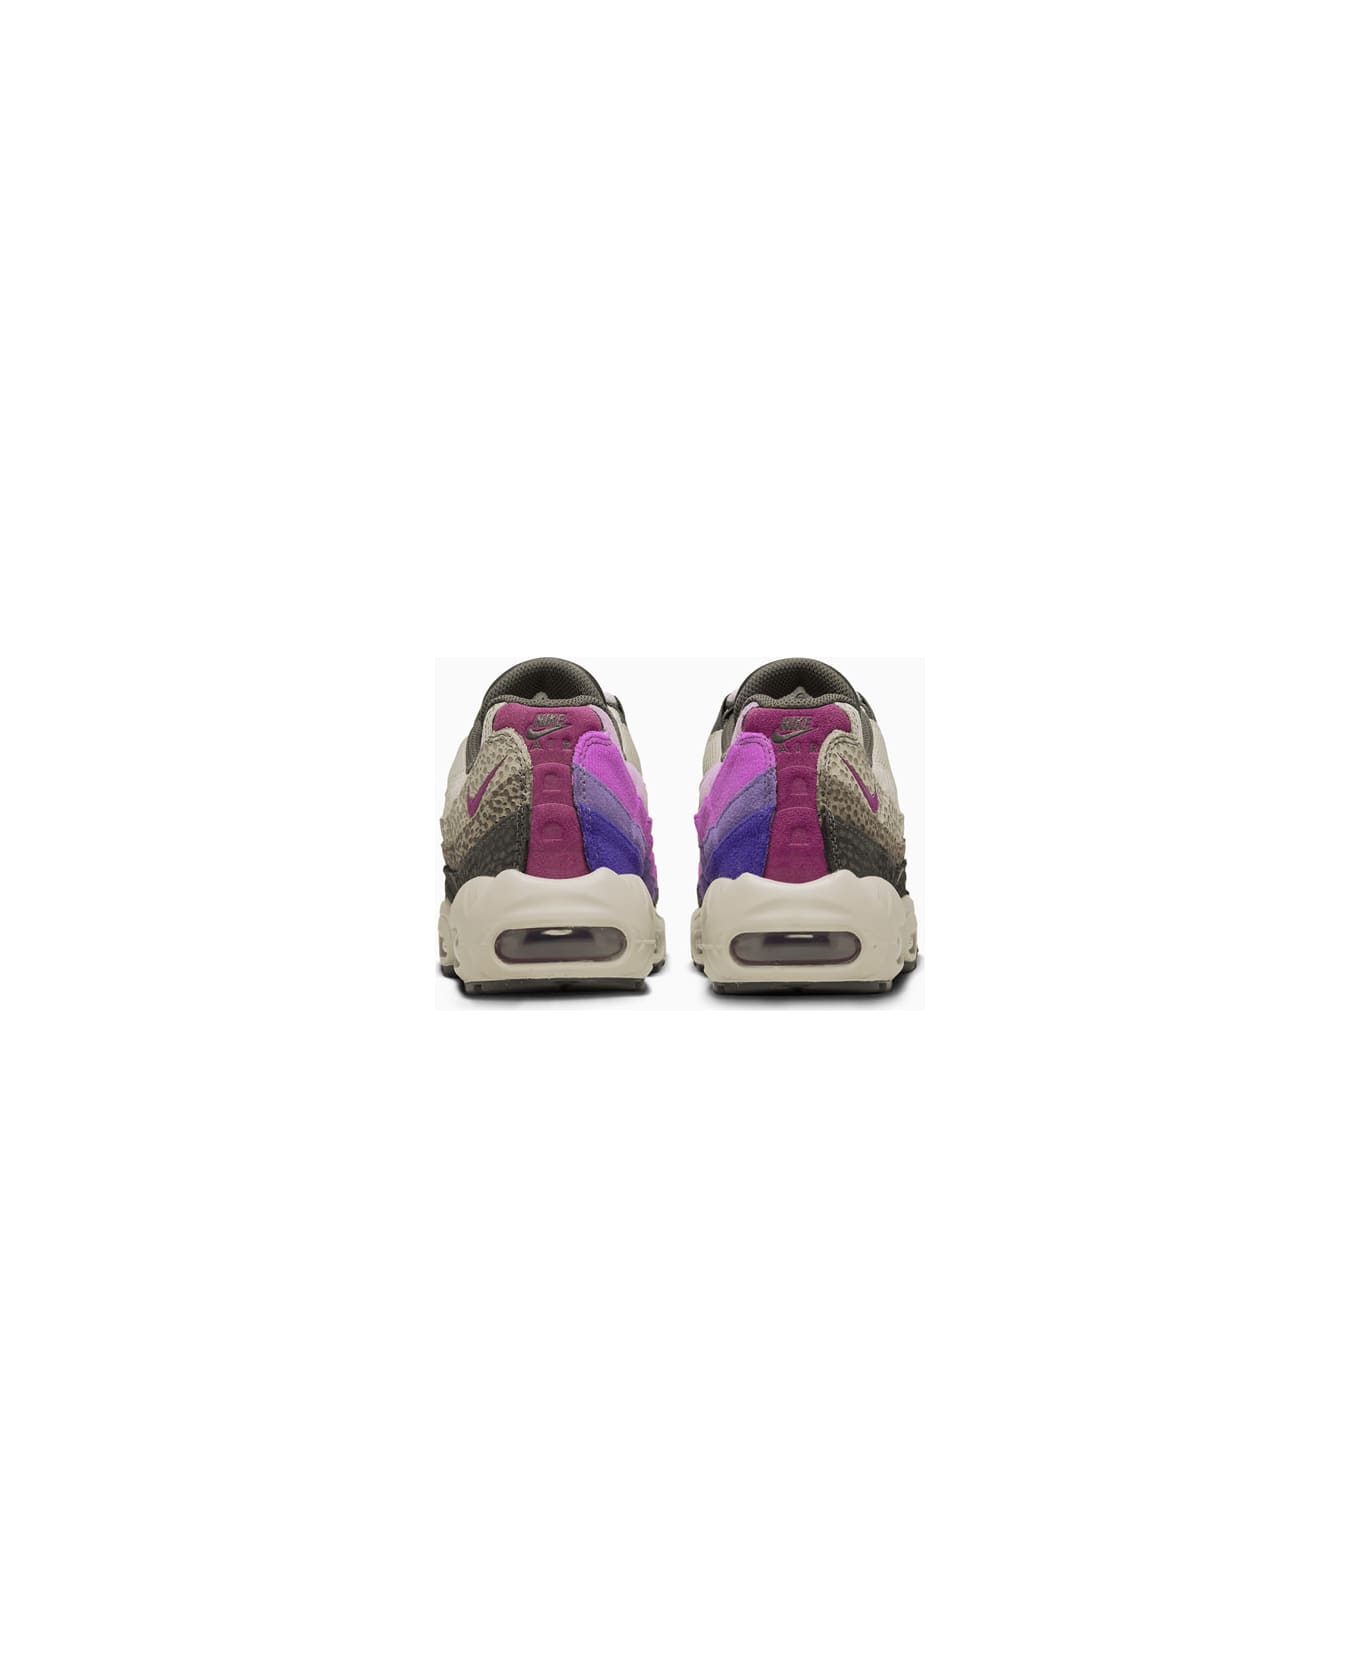 Nike Air Max 95 Sneakers Dx2955-001 - Multiple colors スニーカー